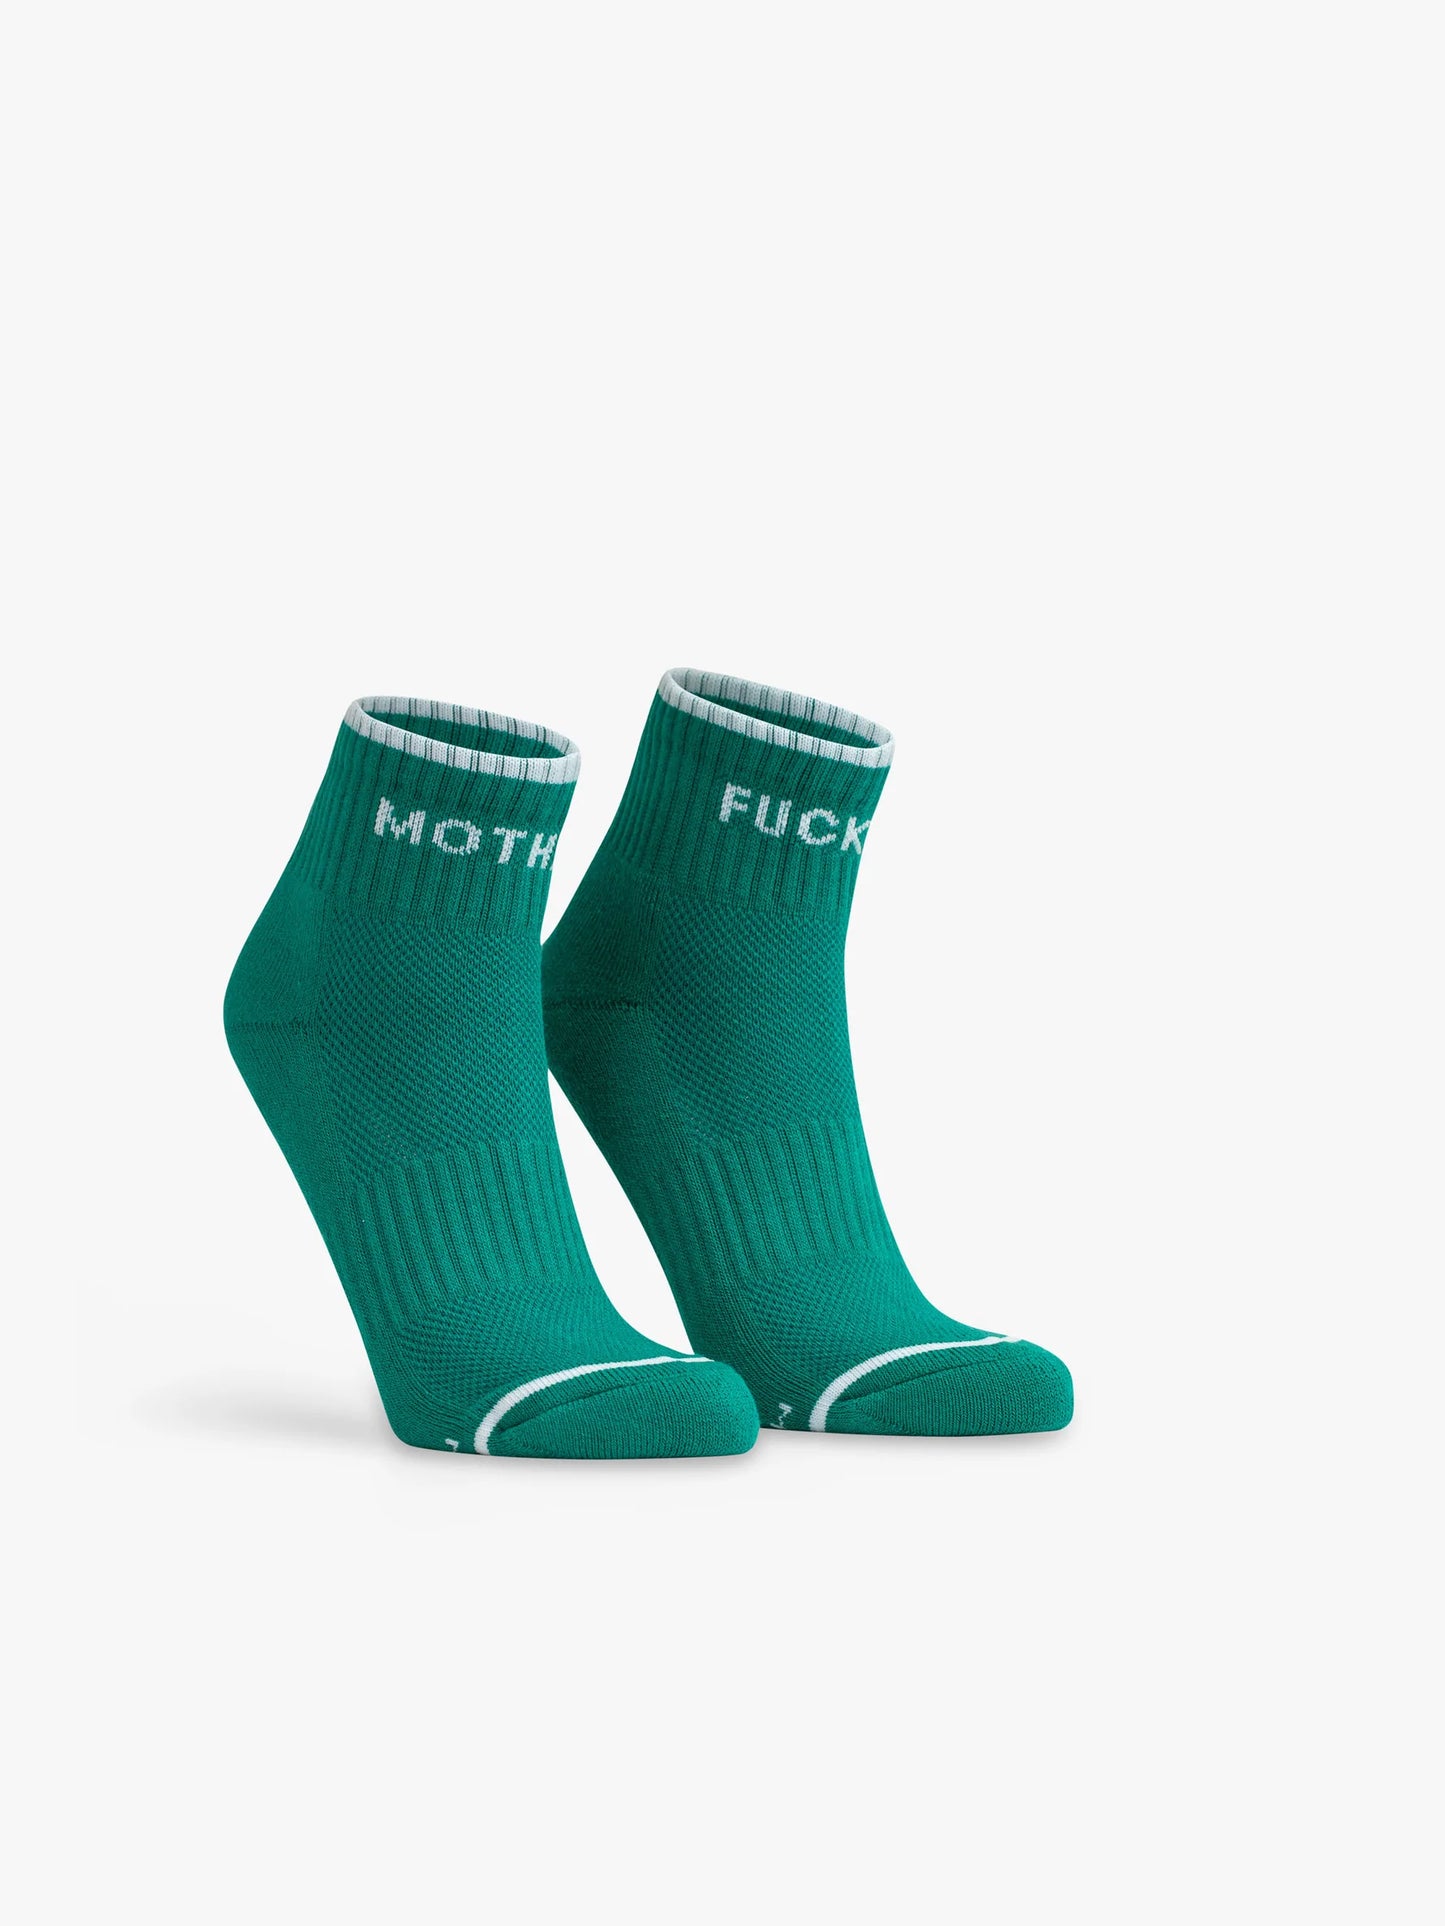 Baby Steps Ankle Socks - MF Green